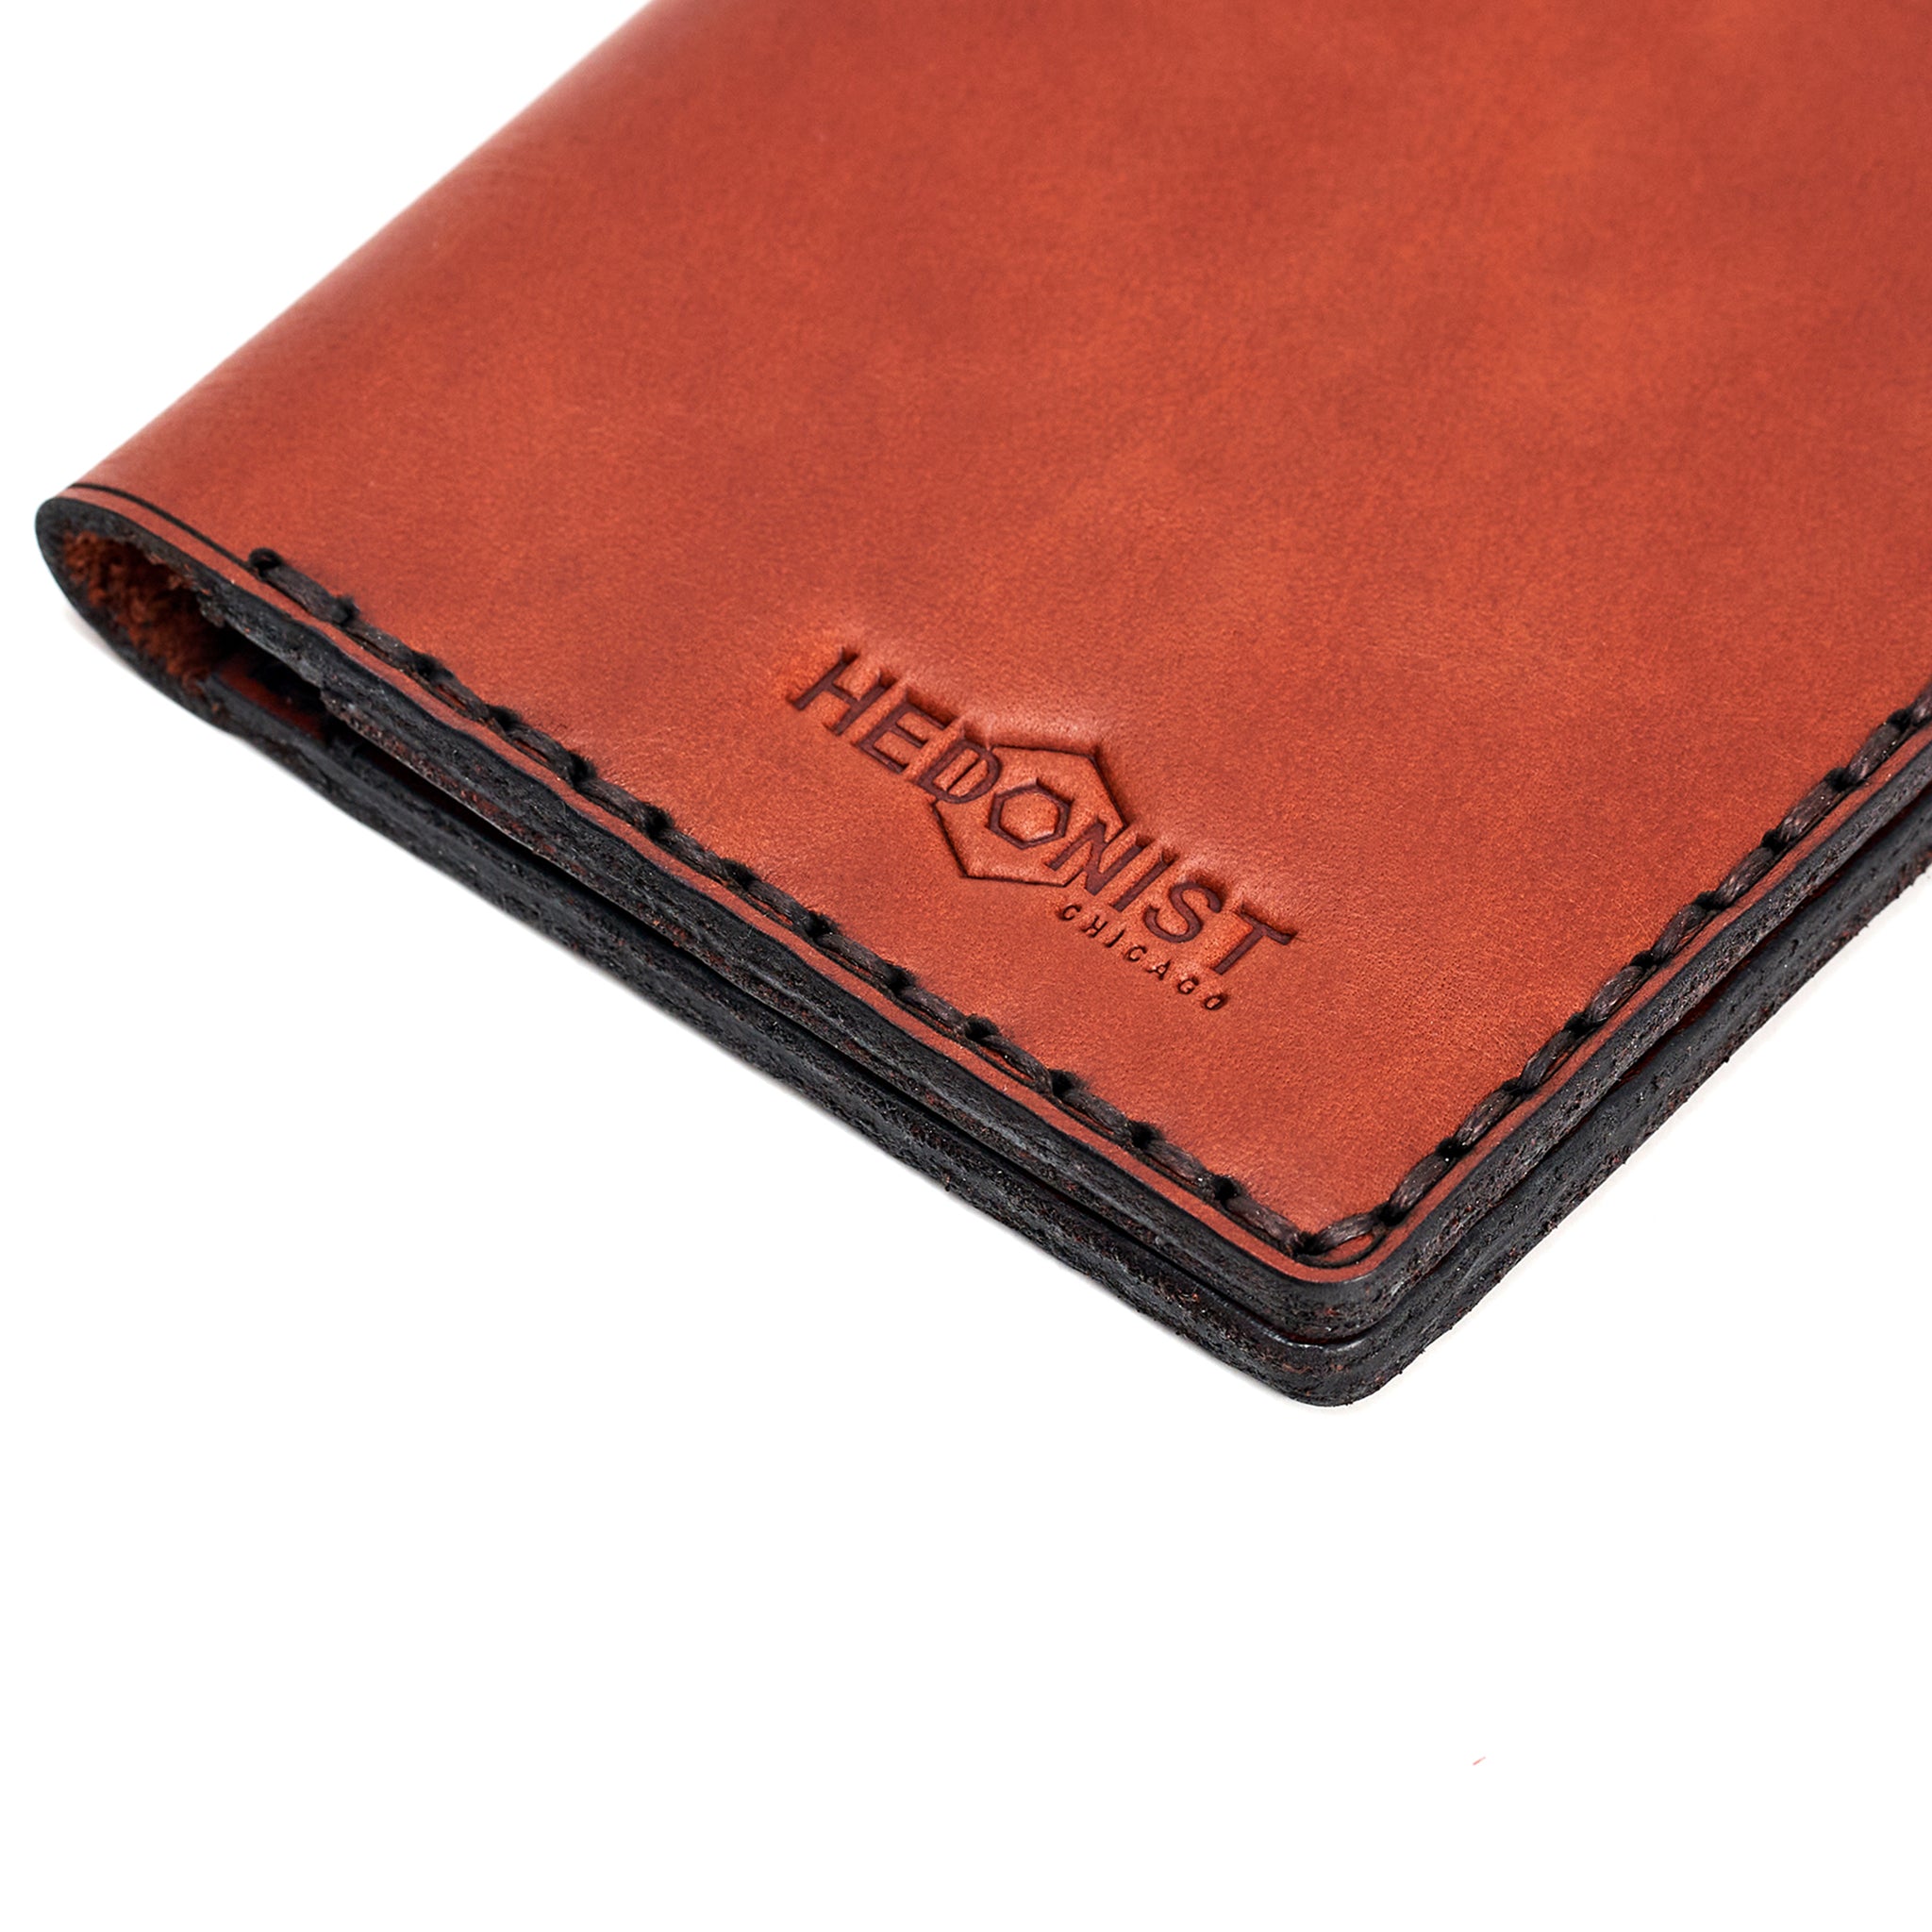 Handmade Leather Passport Case Red Brick 31707643314327